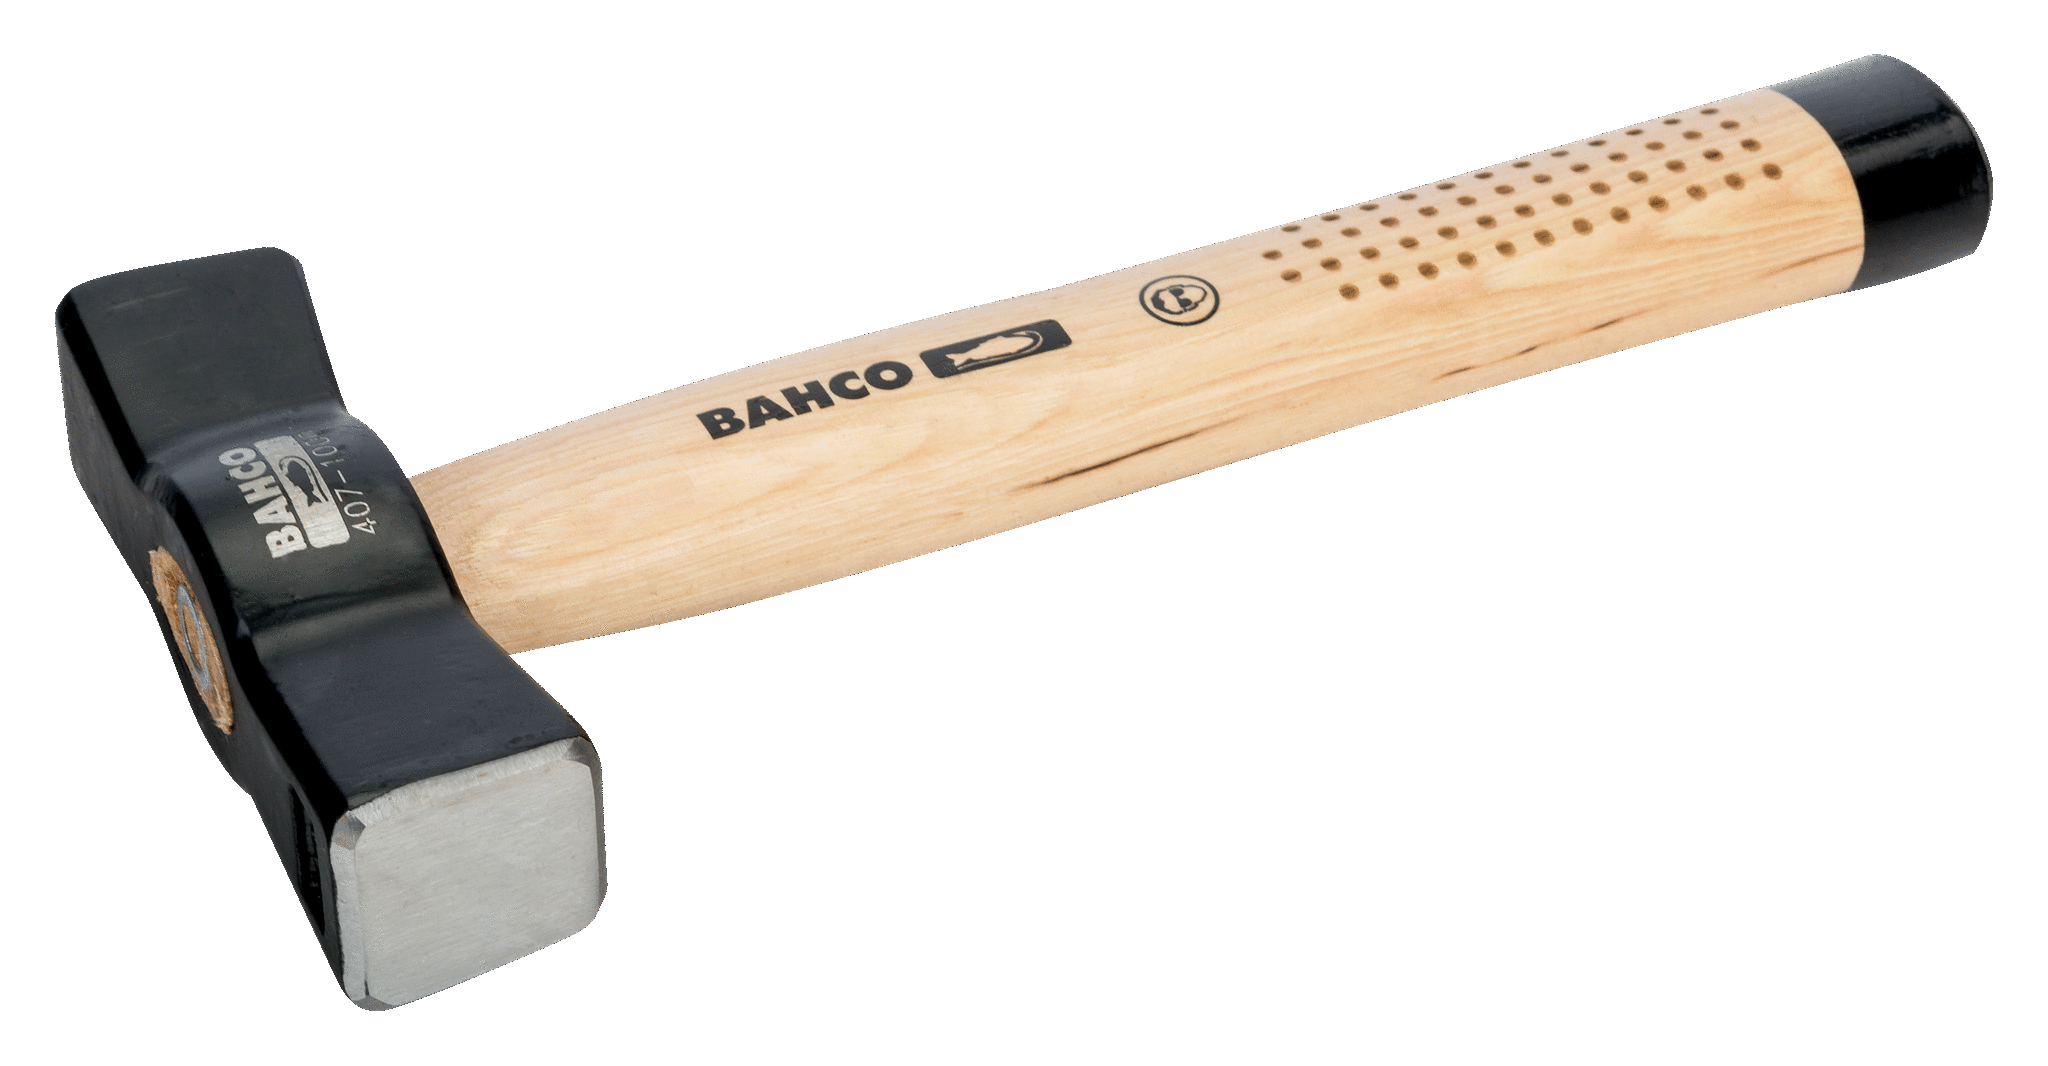 Кувалда с заостренным бойком, деревянная рукоятка BAHCO 407-700